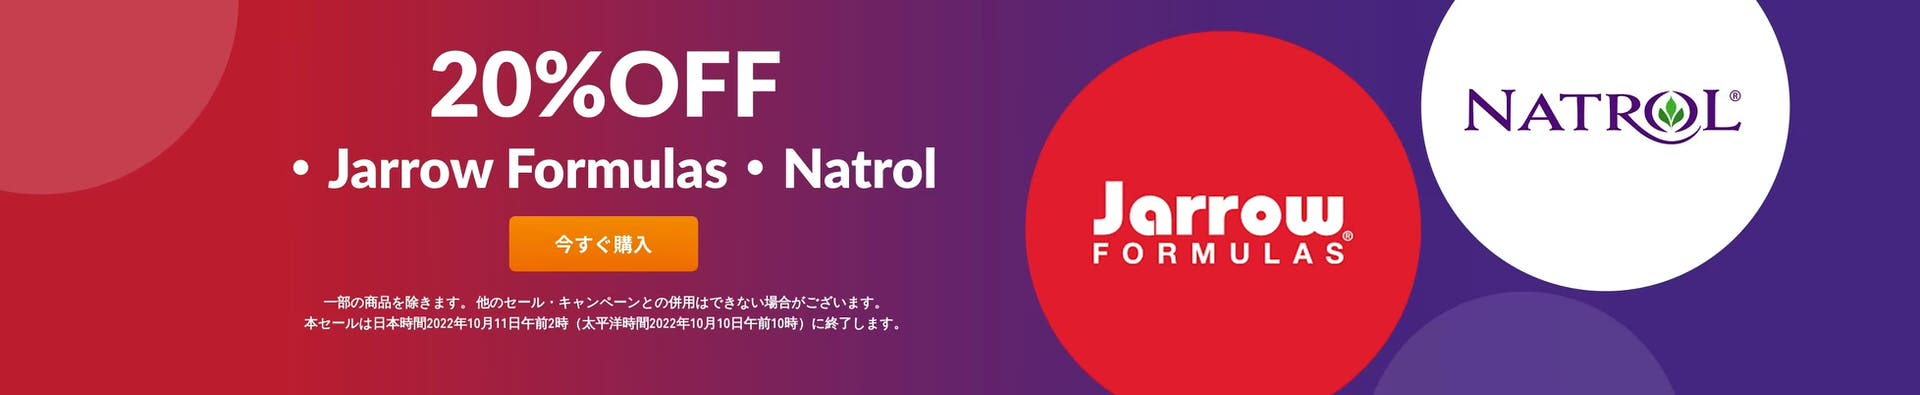 Jarrow Formulas・Natrol製品【20%OFF】